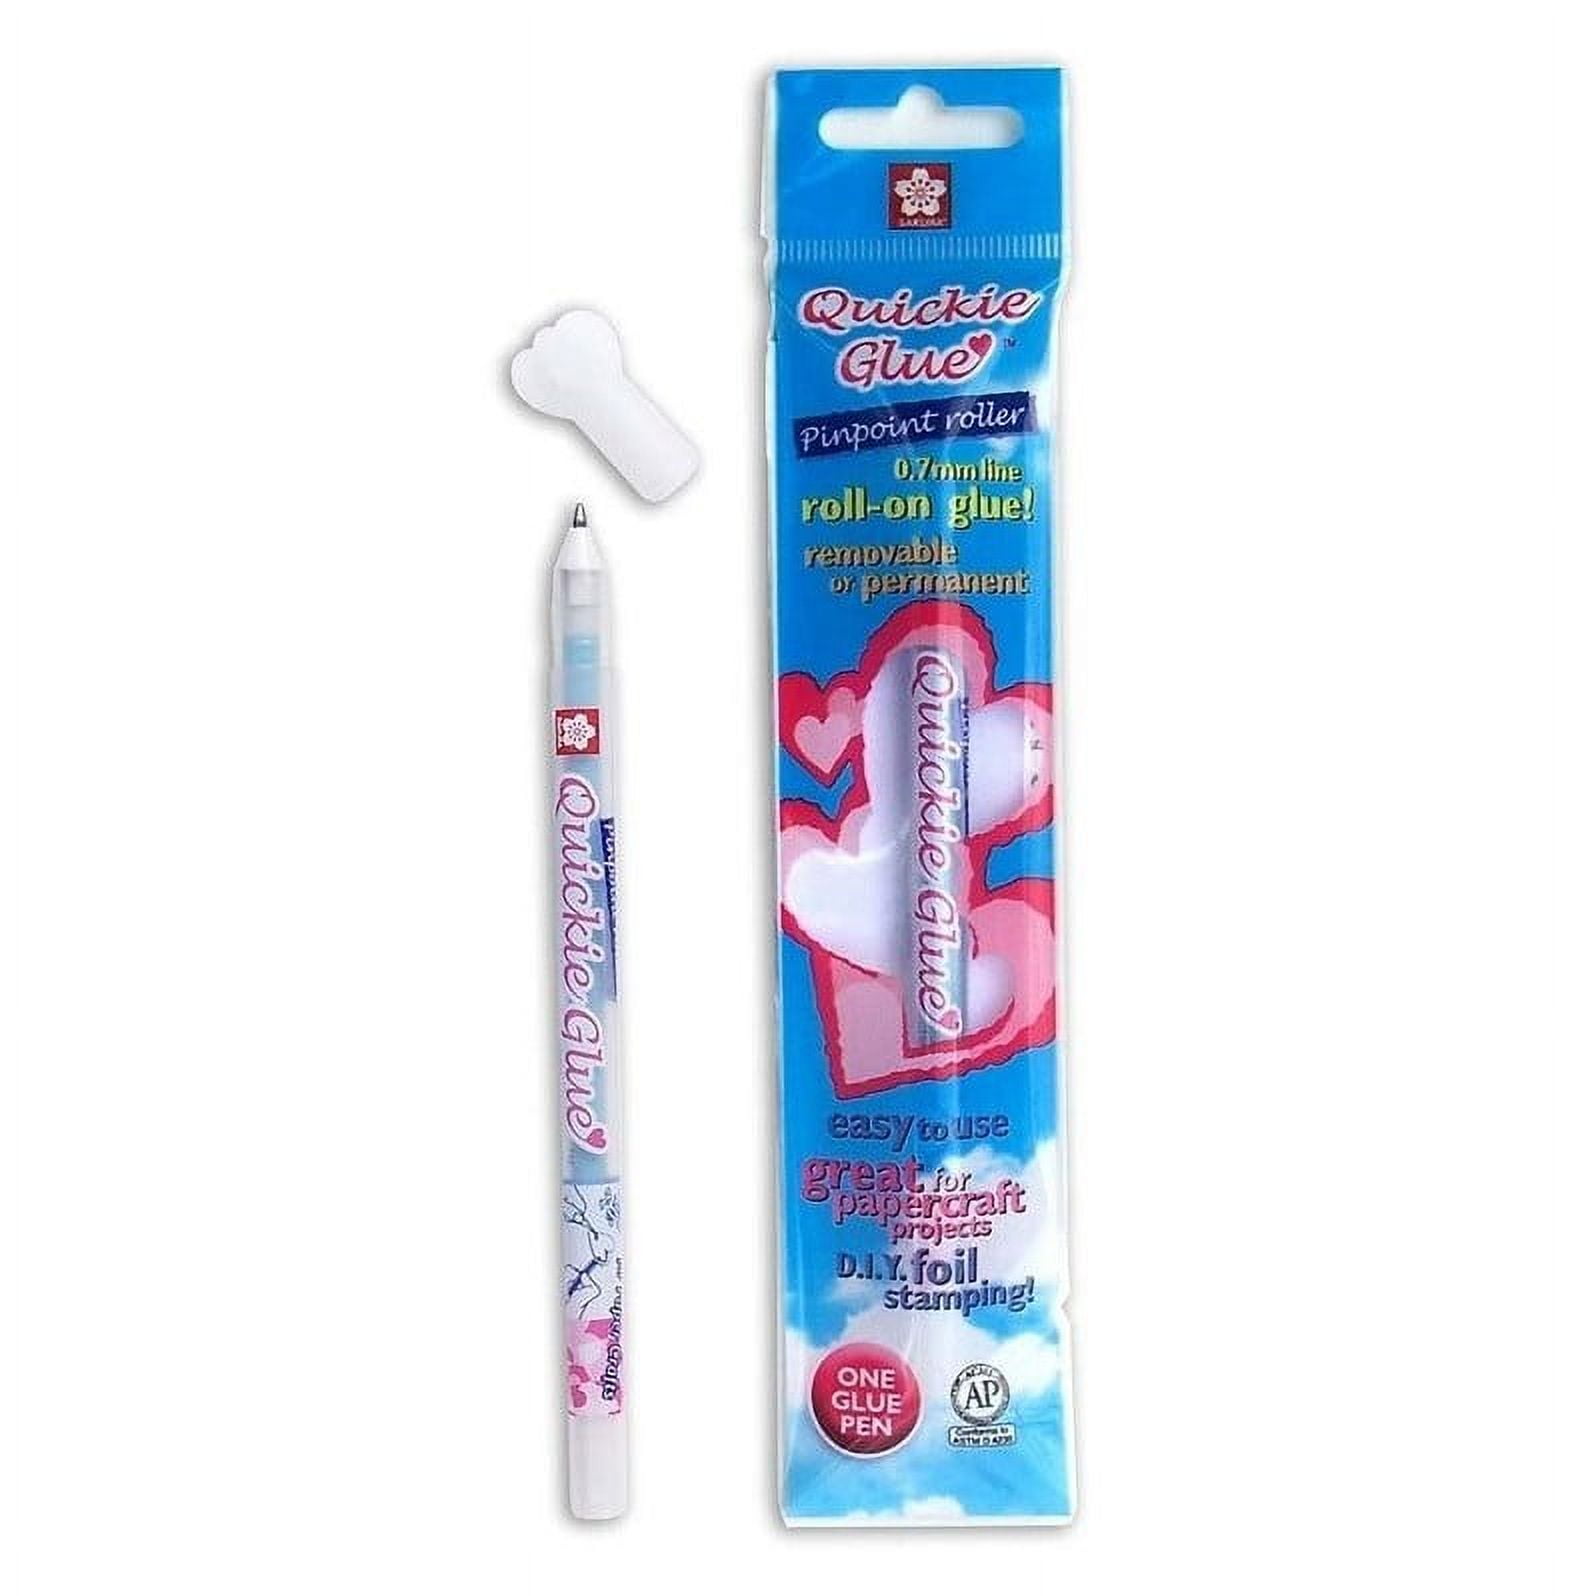 Sakura Quickie Glue Pens - Liquid Glue Pens for Crafting - Pinpoint Roller  Glue - 0.7 mm Tip - 6 Pack